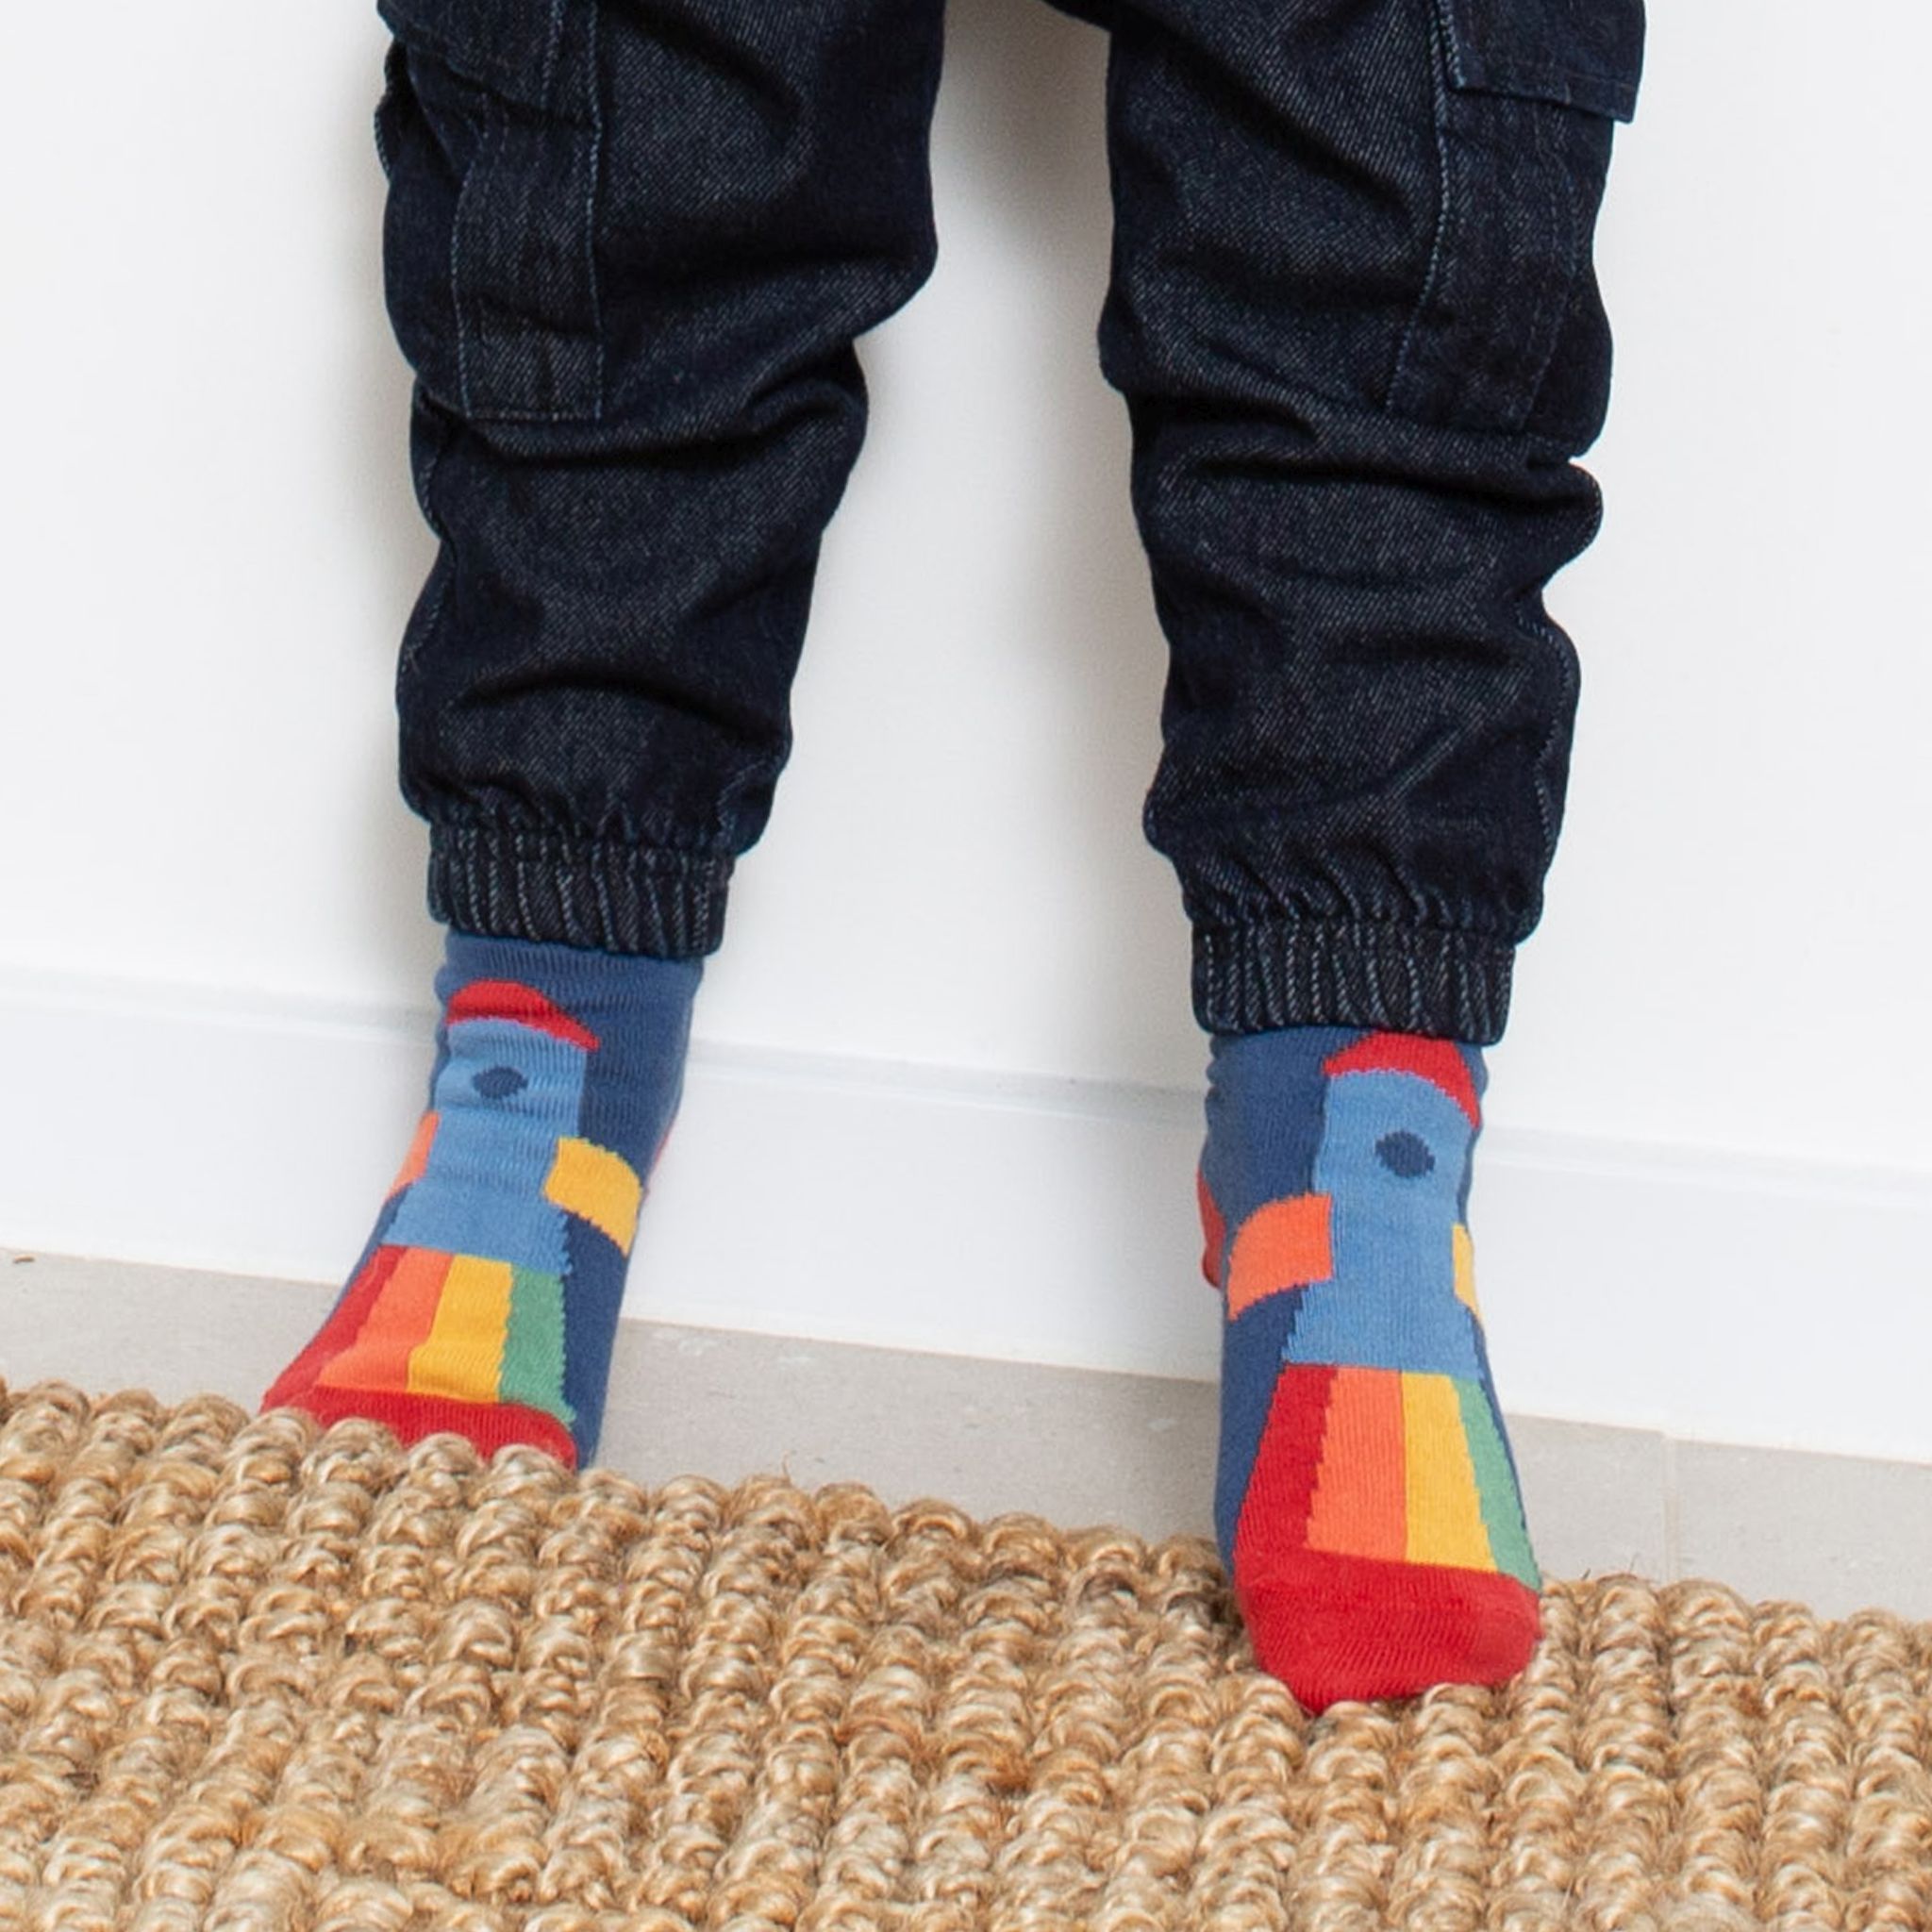 Gemusterte Kinder-Socken im 3er-Pack mit Regenbogen-Rakete